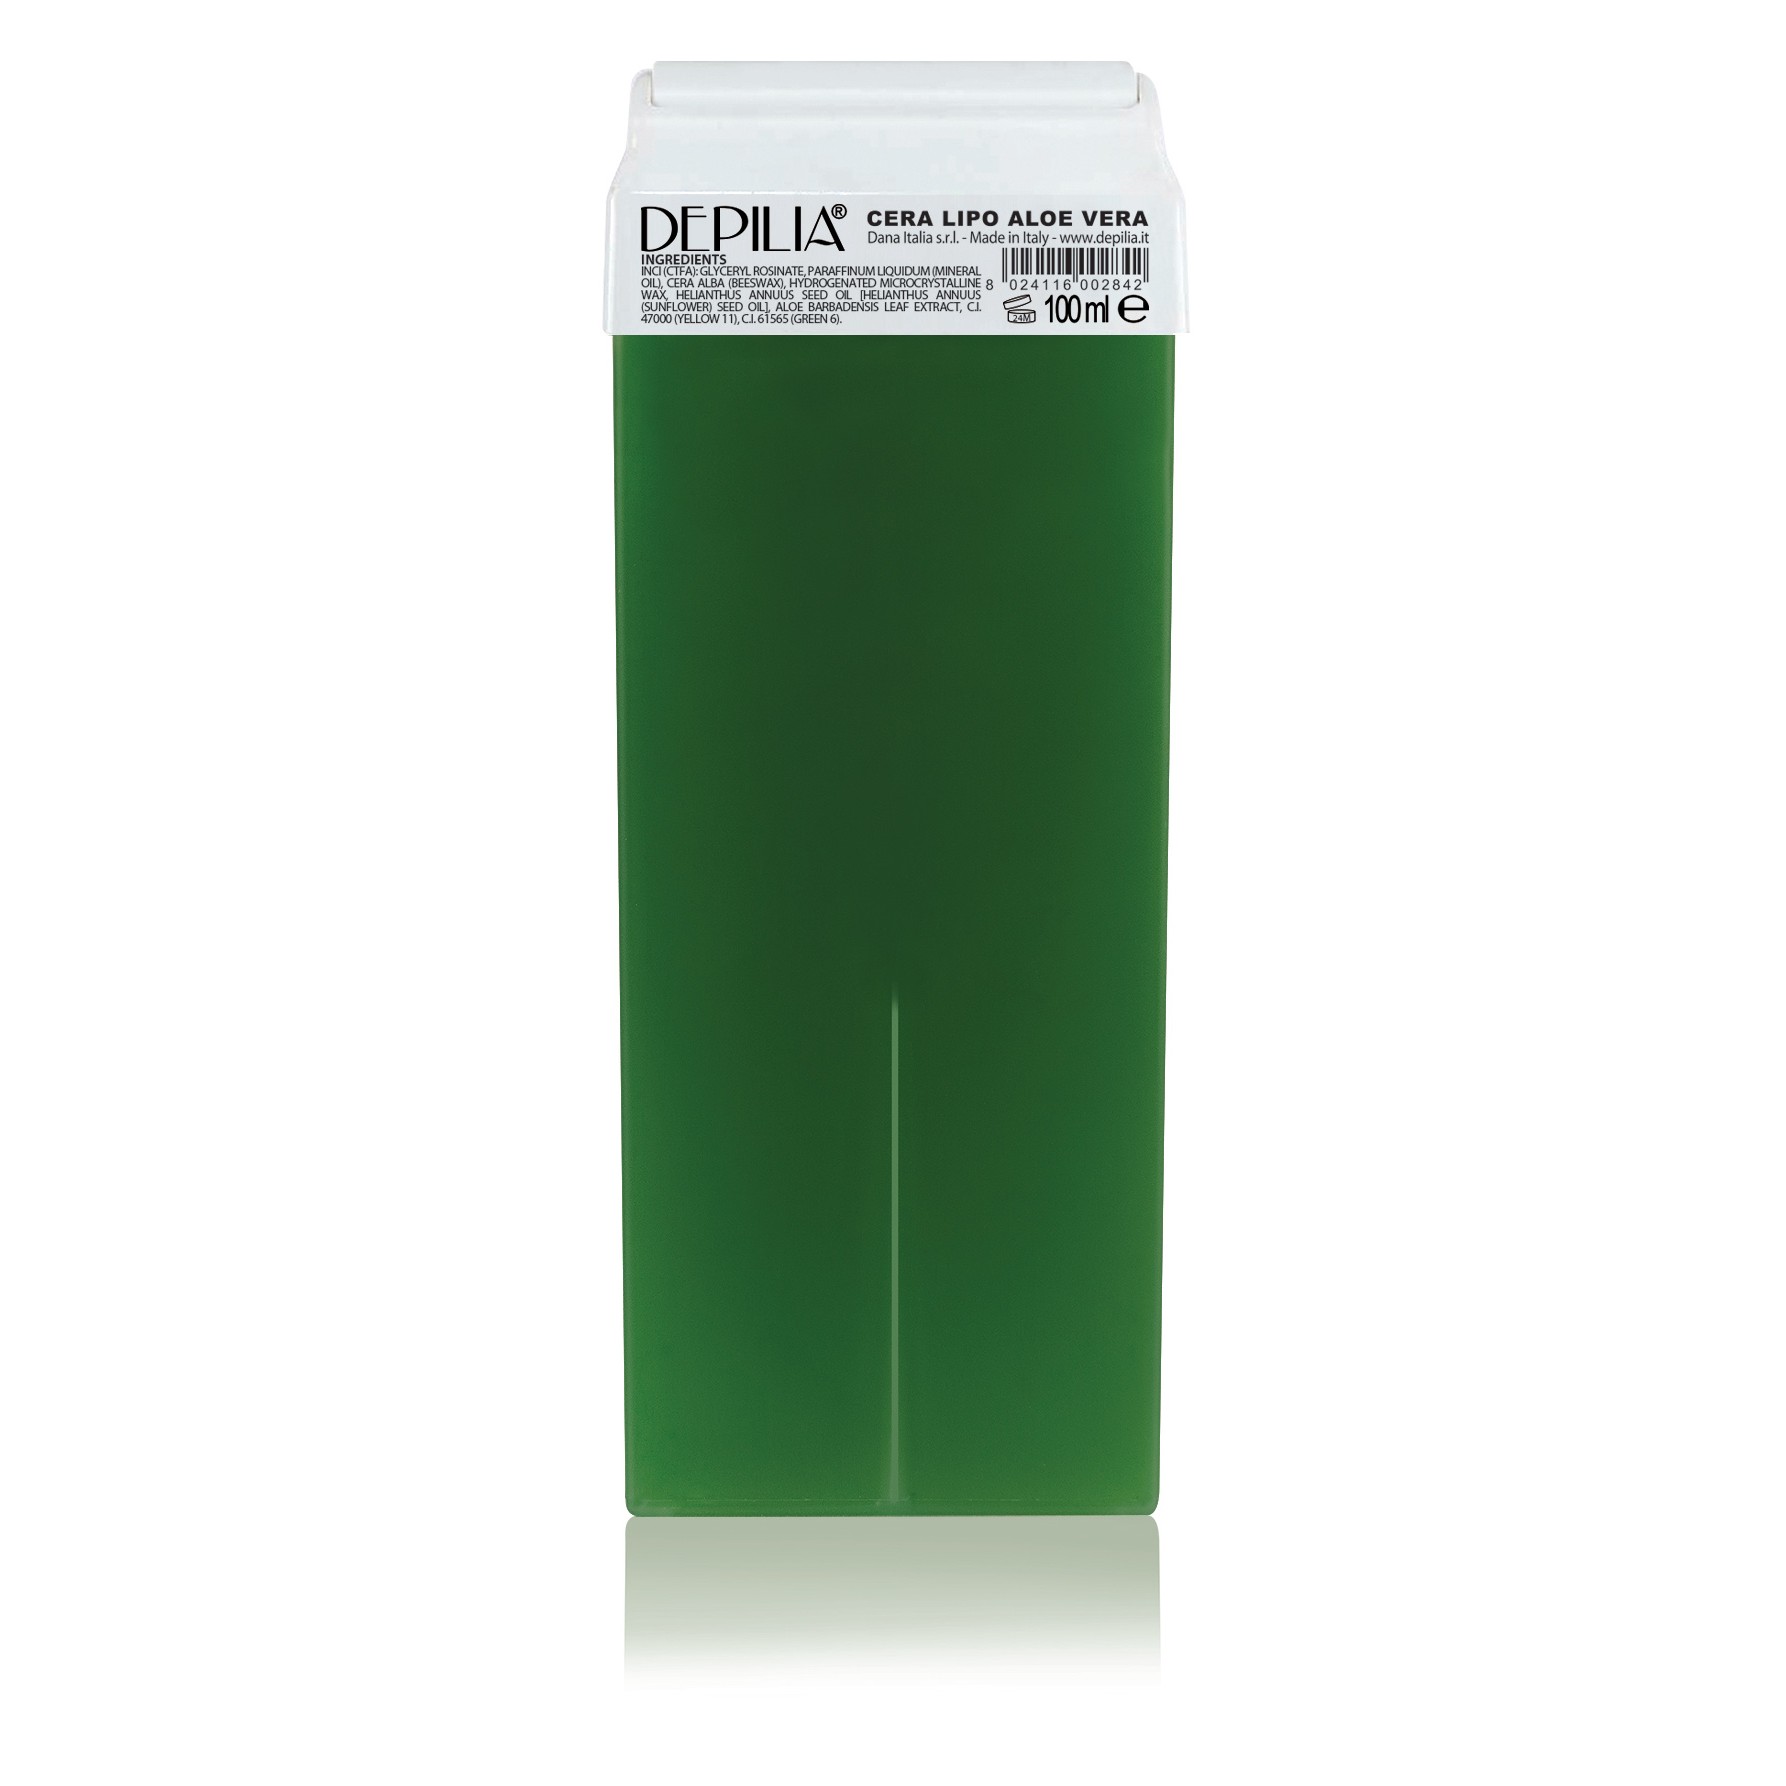 Depilia Roll On Wax Aloe Vera 100ml - Kερί αποτρίχωσης σε ρολέτα με άρωμα αλόης 240025-0